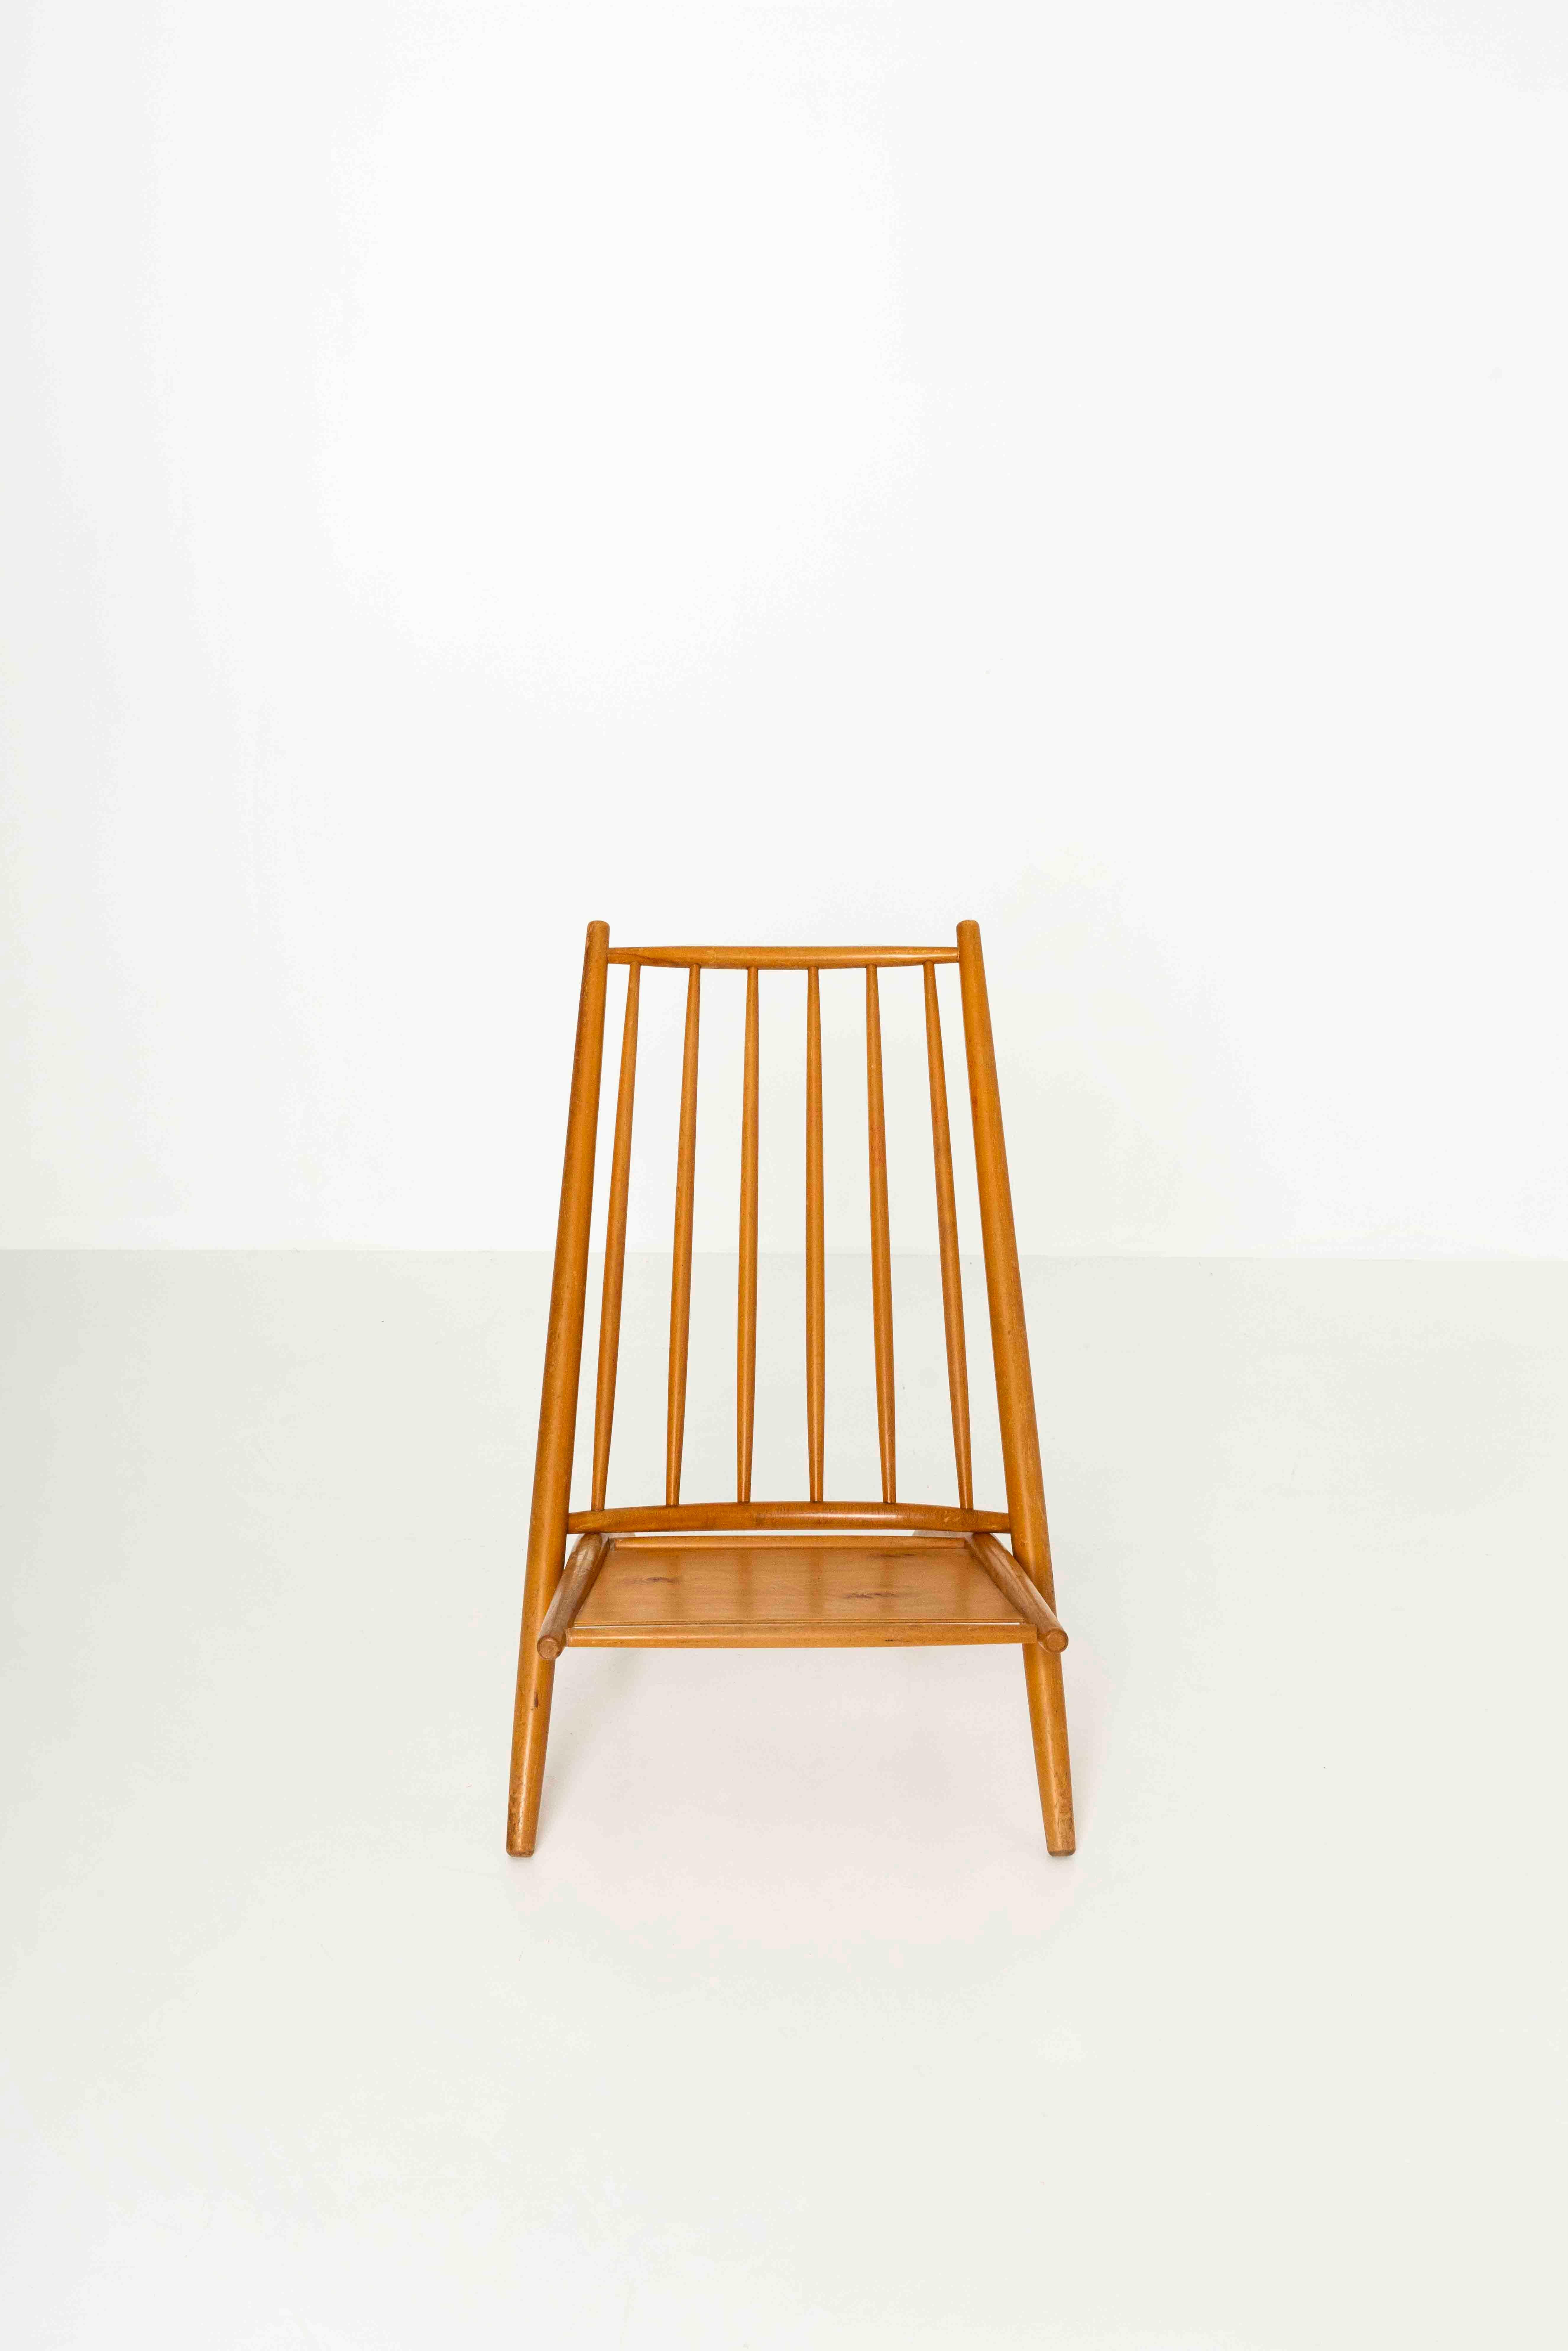 Scandinavian Modern Congo Chair in Birch by Ilmari Tapiovaara for Asko, Finland, 1960s For Sale